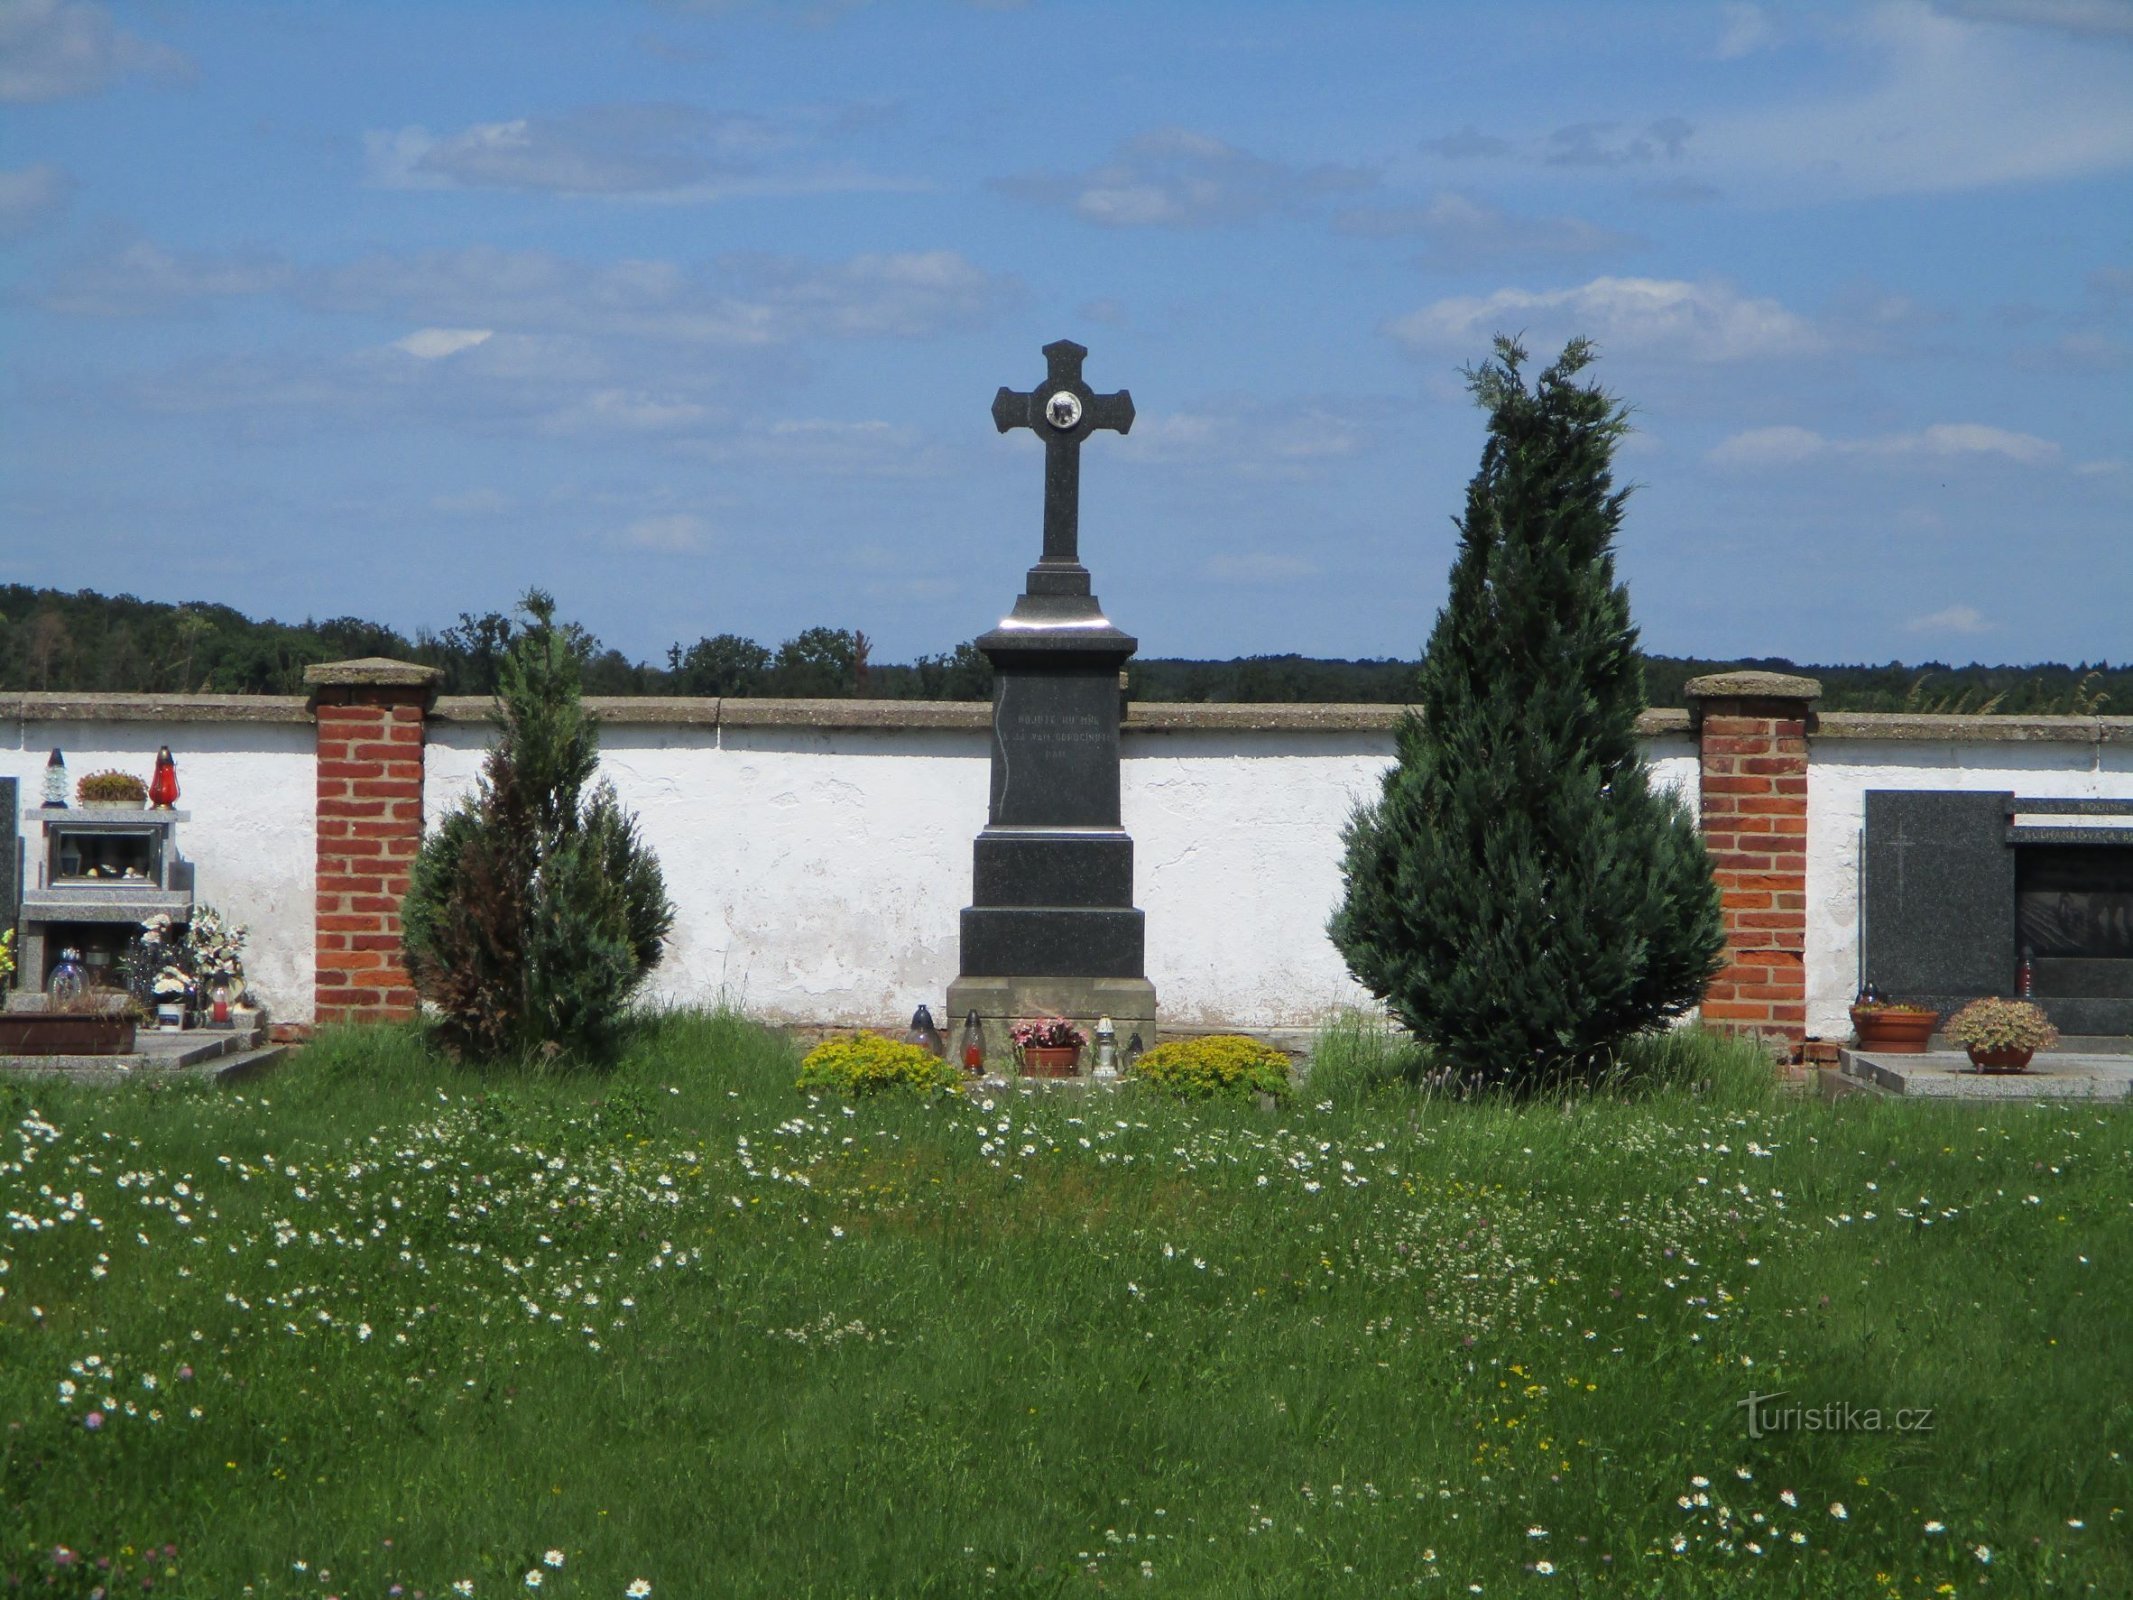 Cmentarz położony niedaleko krzyża (Zvíkov, 30.6.2020)